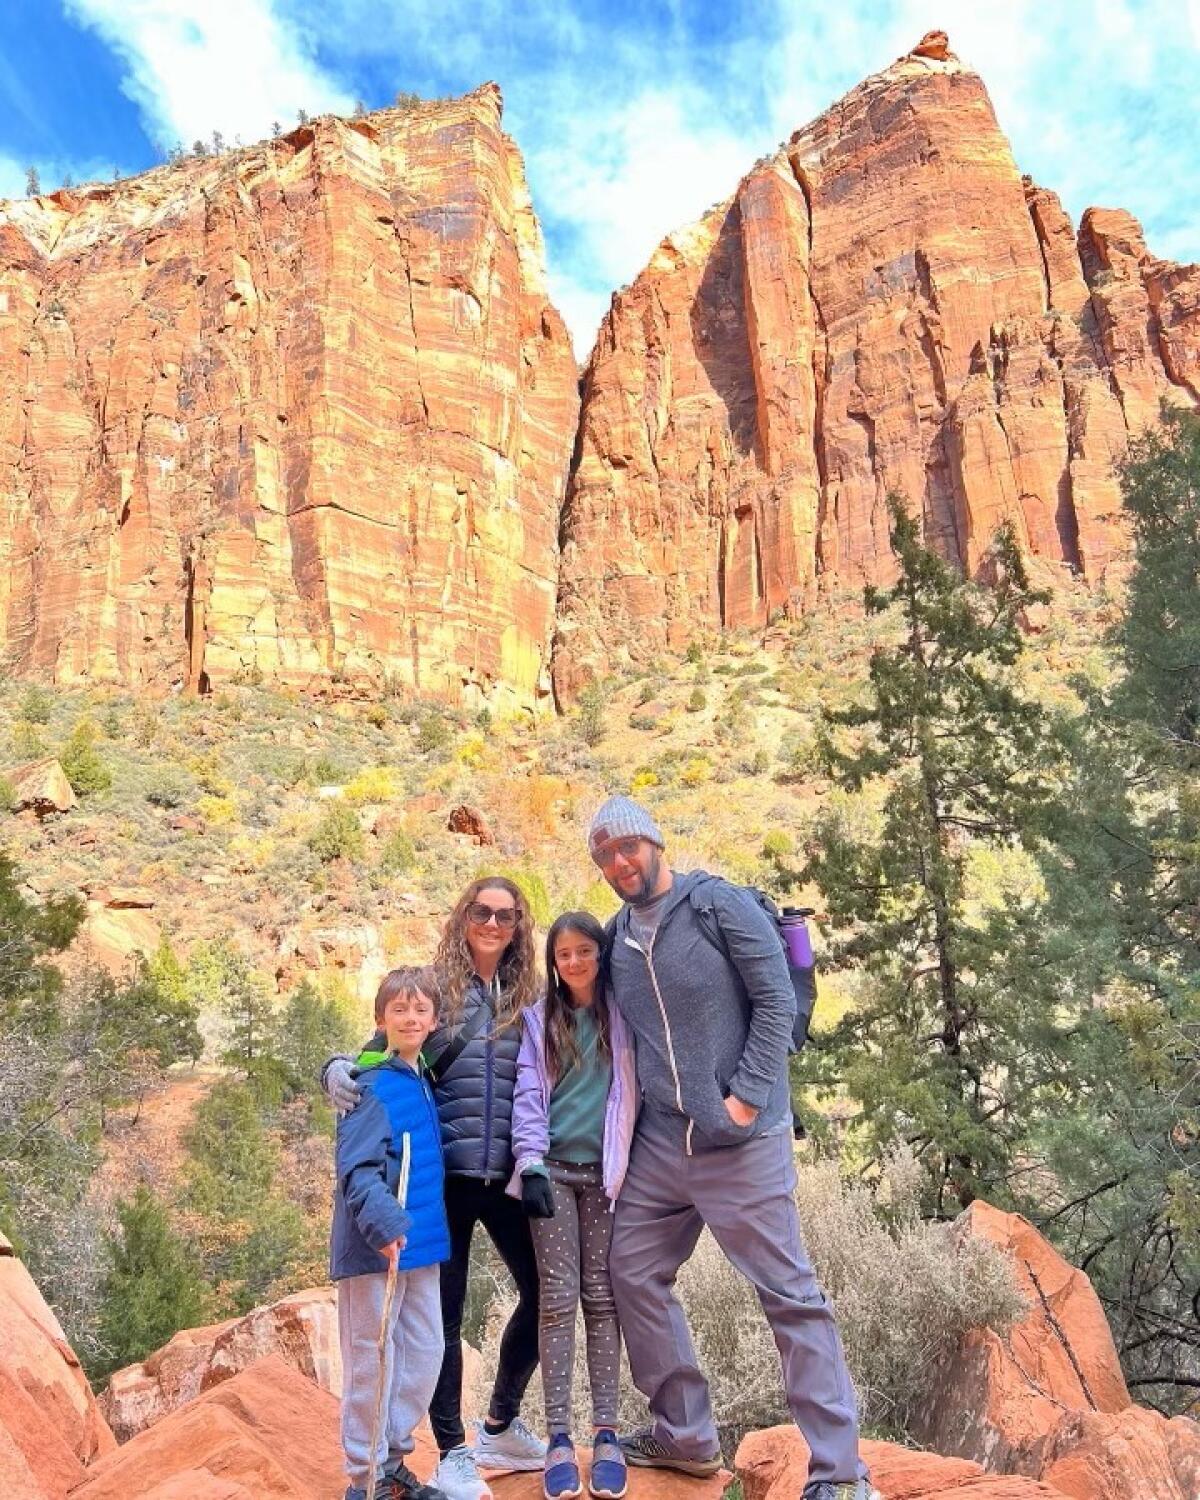 The Singer family on a vacation trip. From left: Ori Singer, Sophy Singer, Sasha Singer and Michael Singer.